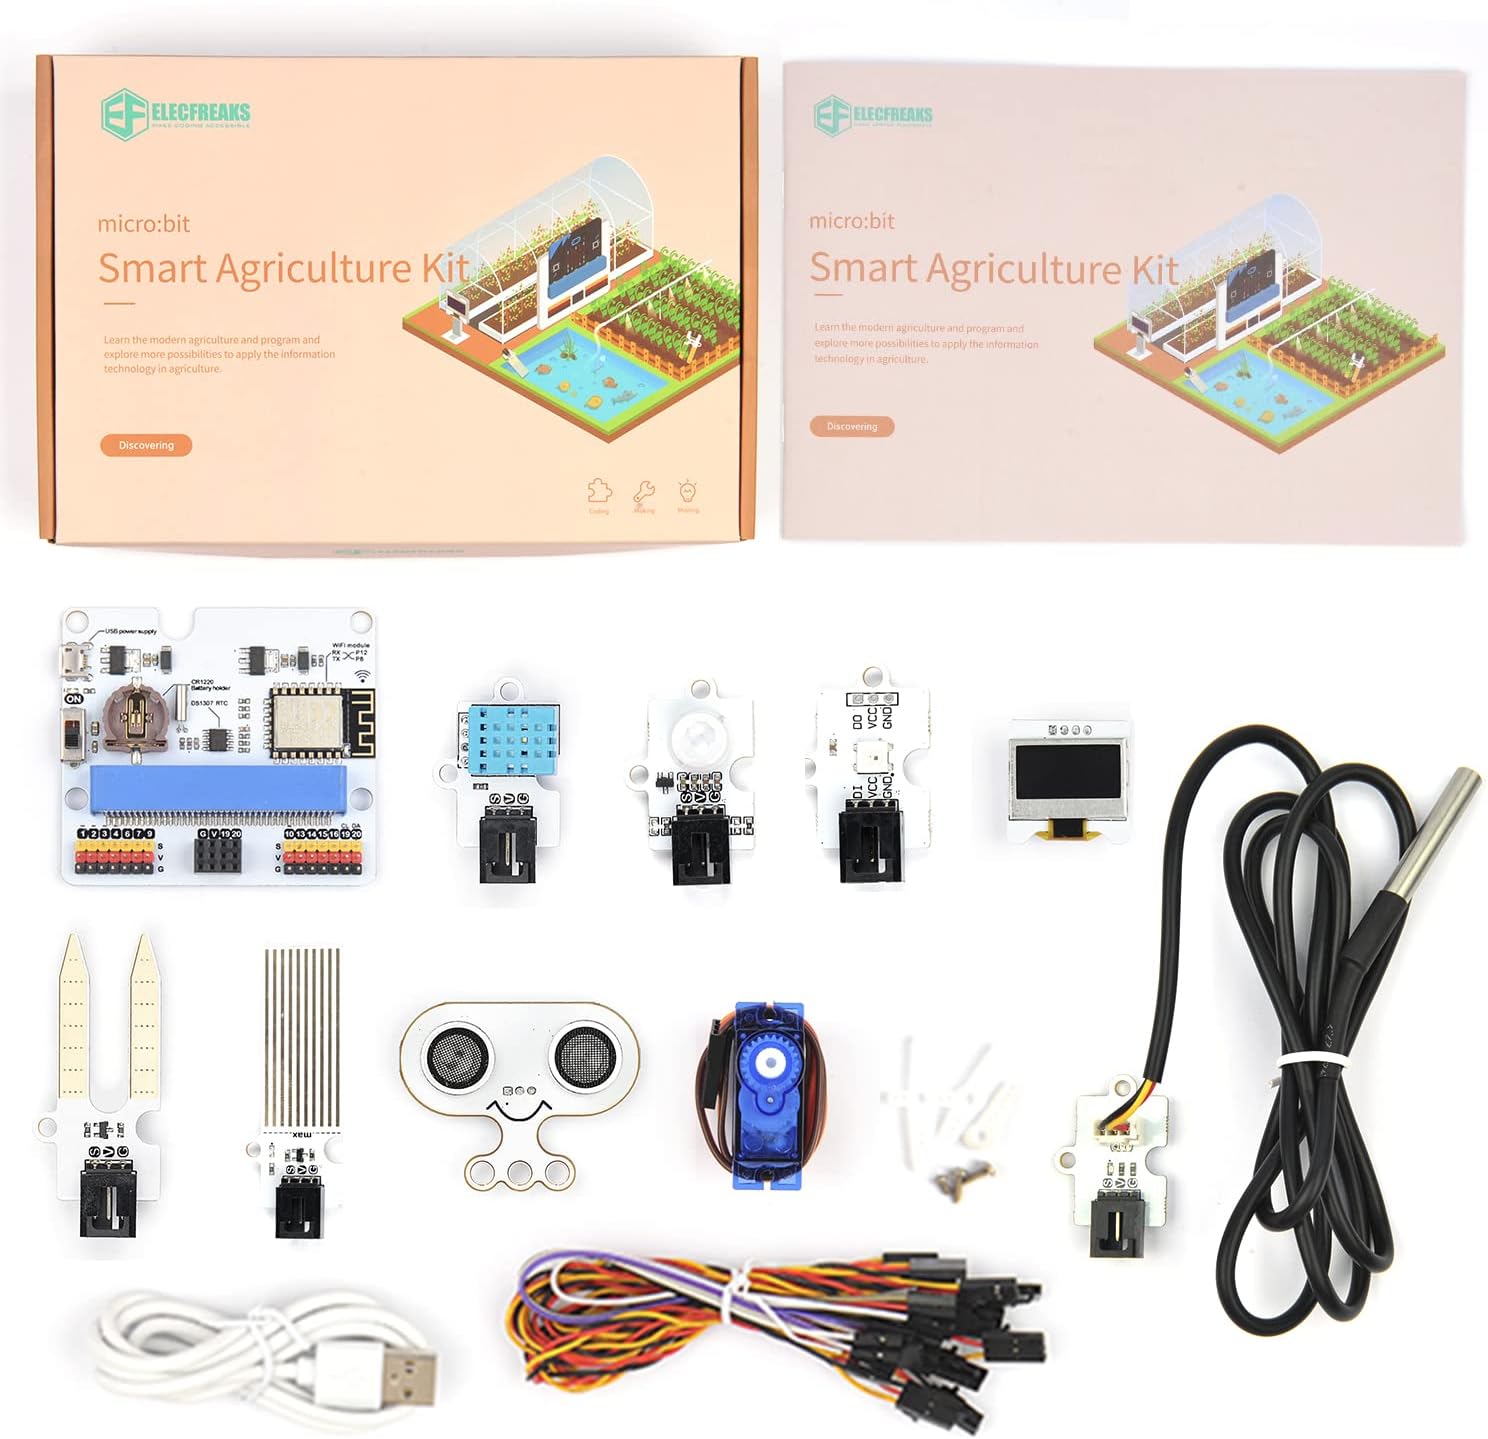 ELECFREAKS micro:bit Smart Agriculture Kit, DIY Programming STEM kit with Basic Coding Electronics Sensors